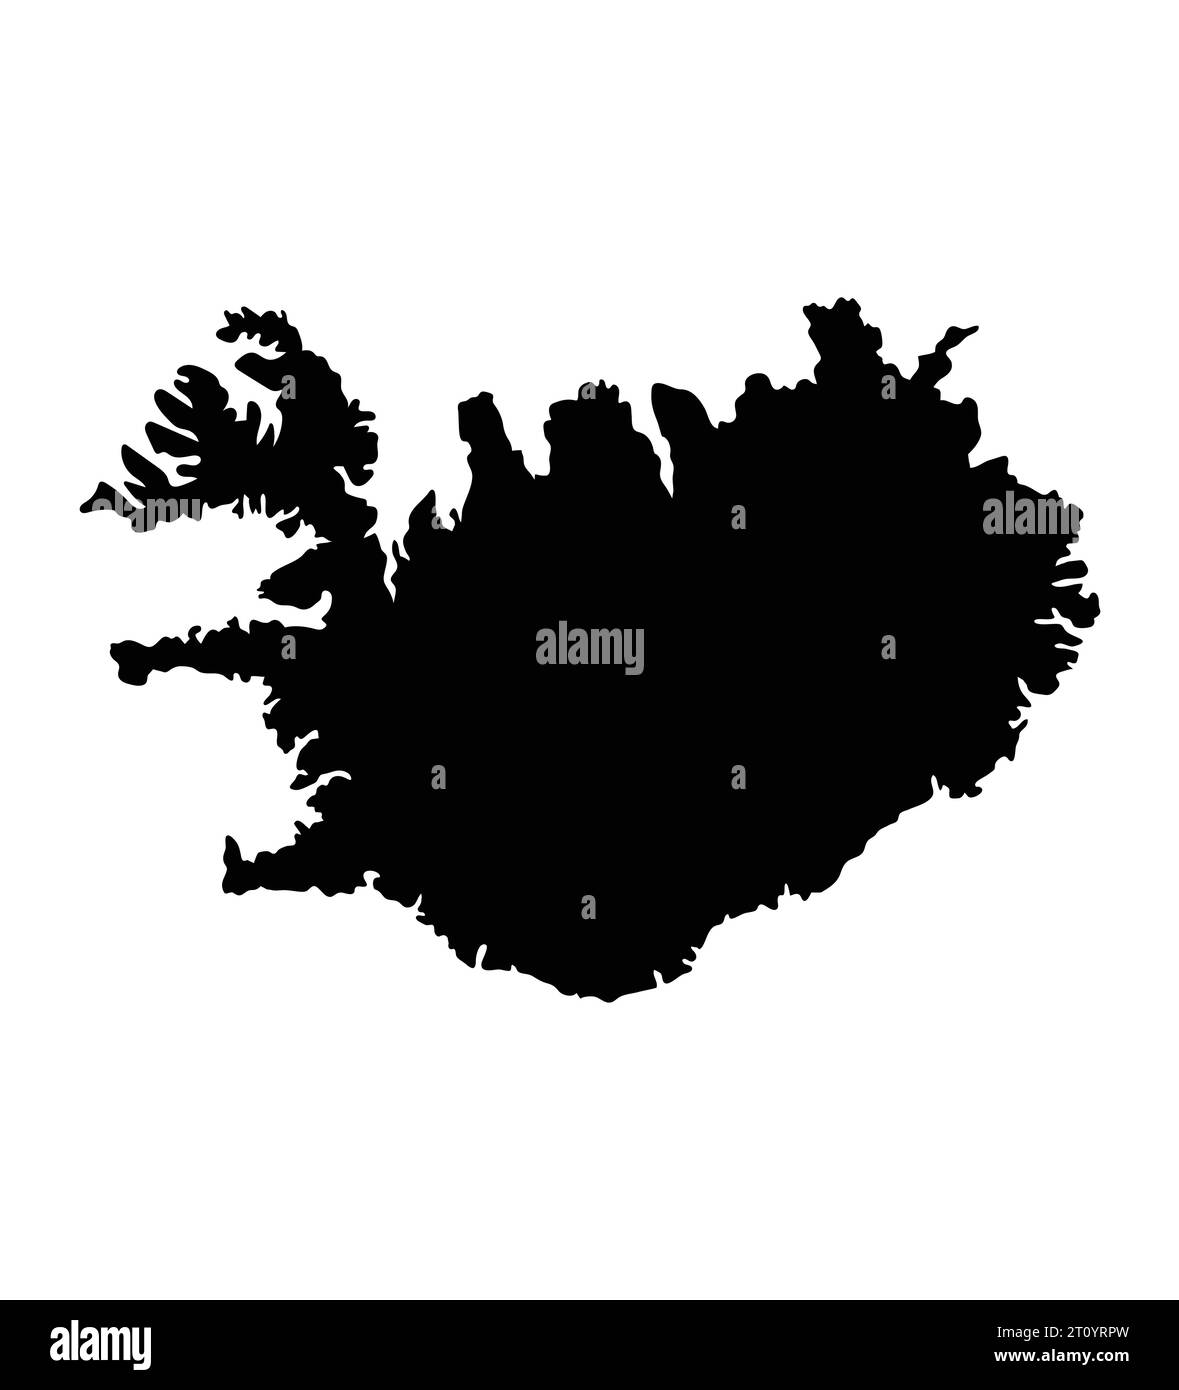 Iceland island map silhouette region territory, black shape style illustration Stock Vector